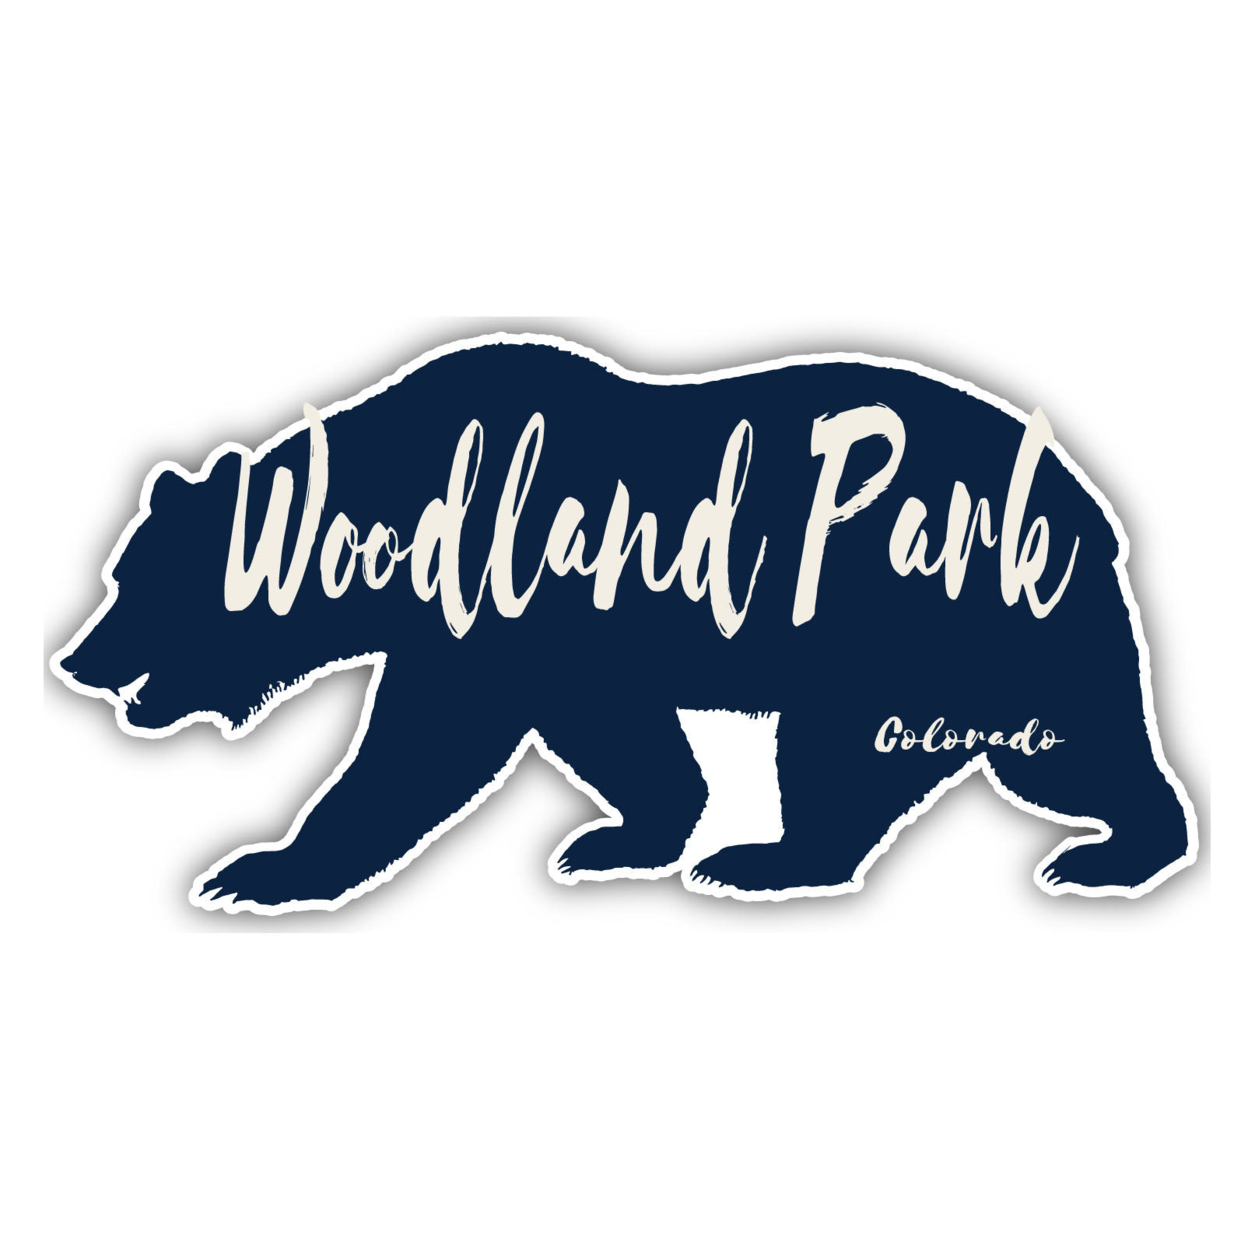 Woodland Park Colorado Souvenir Decorative Stickers (Choose Theme And Size) - Single Unit, 2-Inch, Bear